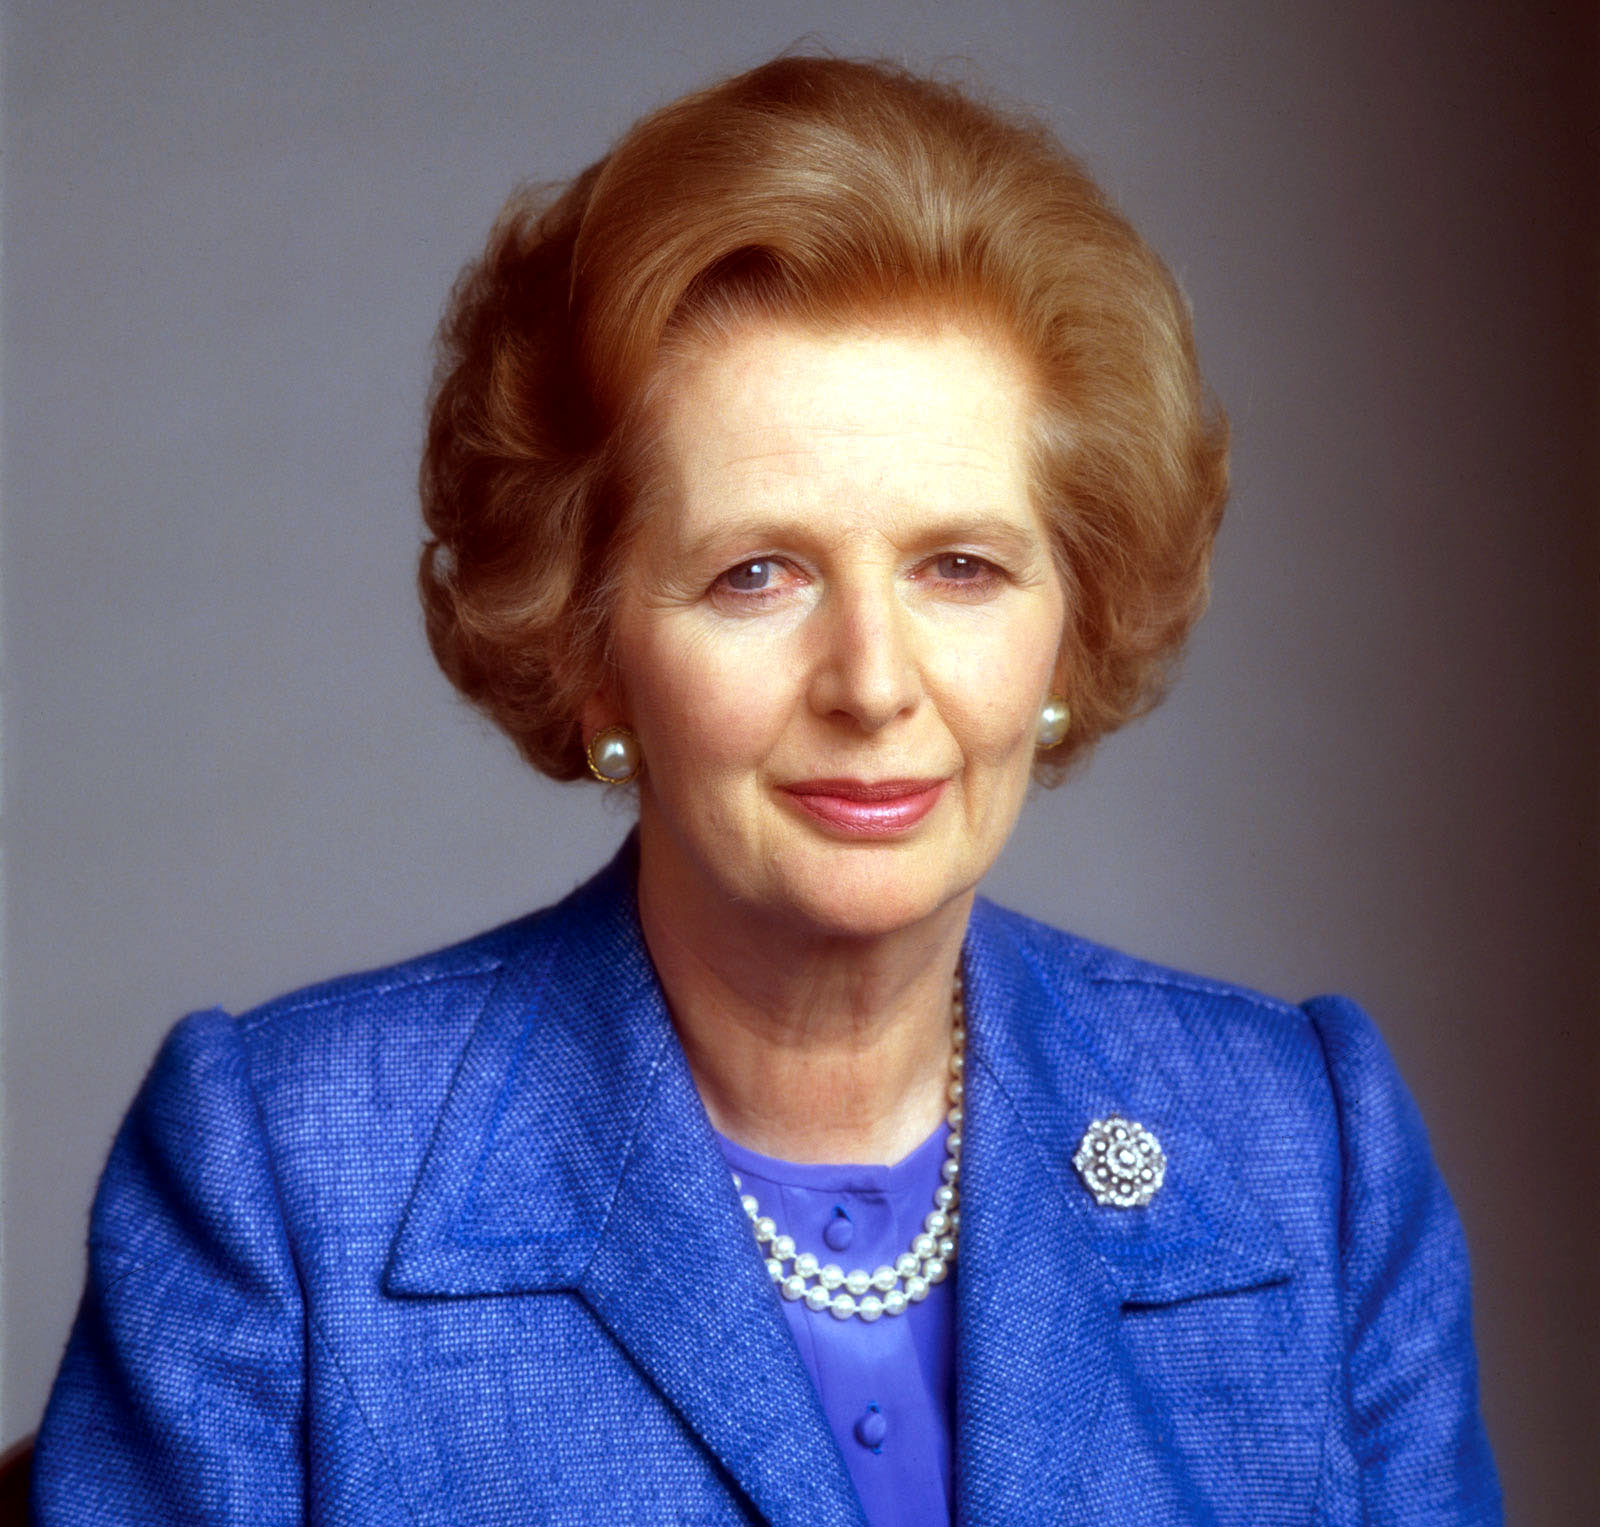 [image of Margaret Thatcher]